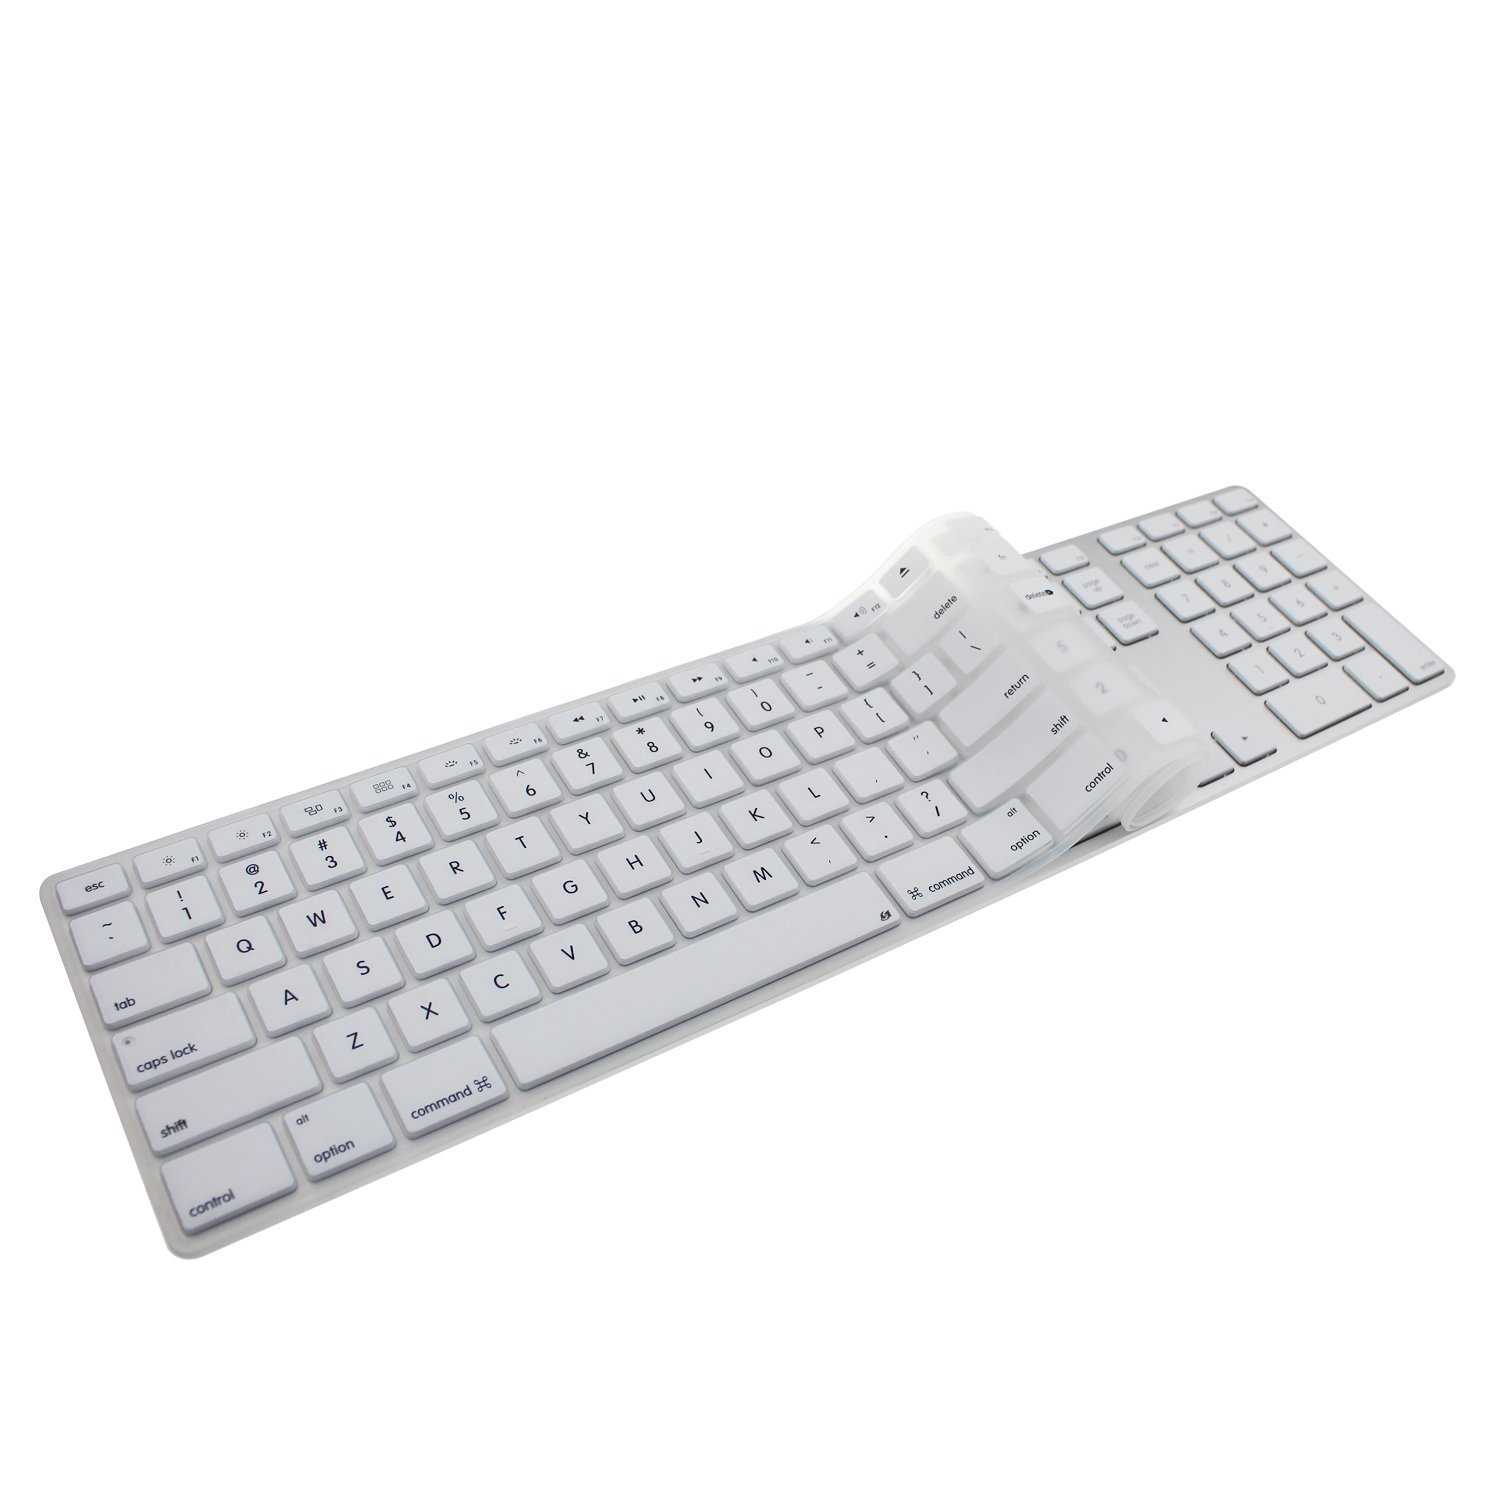 Apple mb110ru/b wired keyboard white usb (белый) - купить , скидки, цена, отзывы, обзор, характеристики - клавиатуры